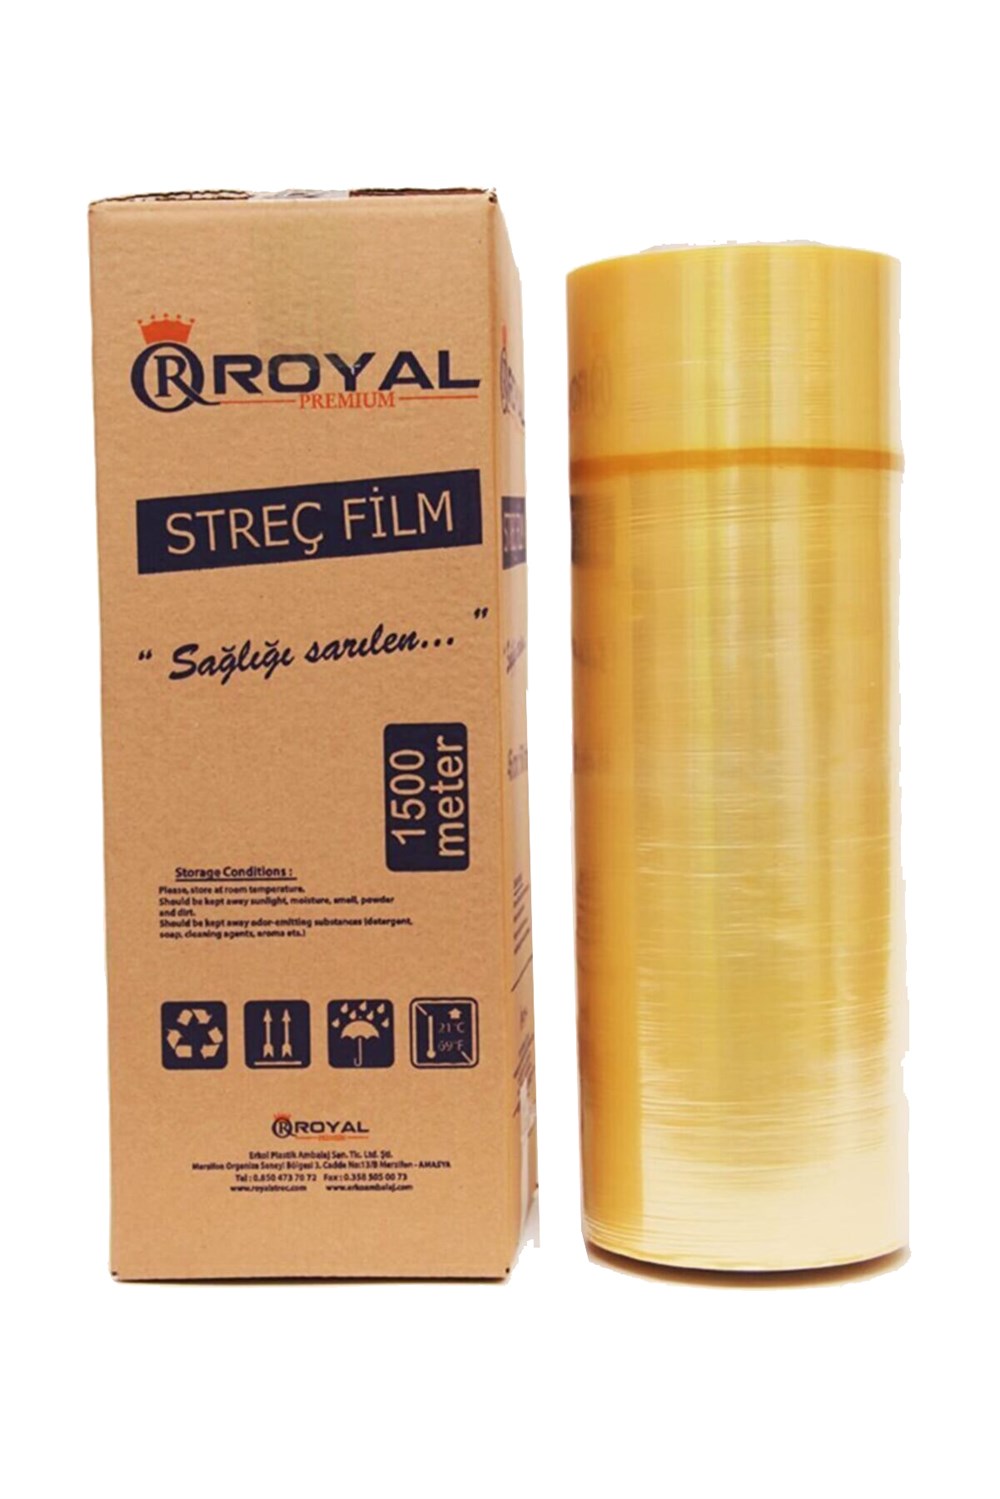 Royal Streç Film 45x1500 - 8 Mikron